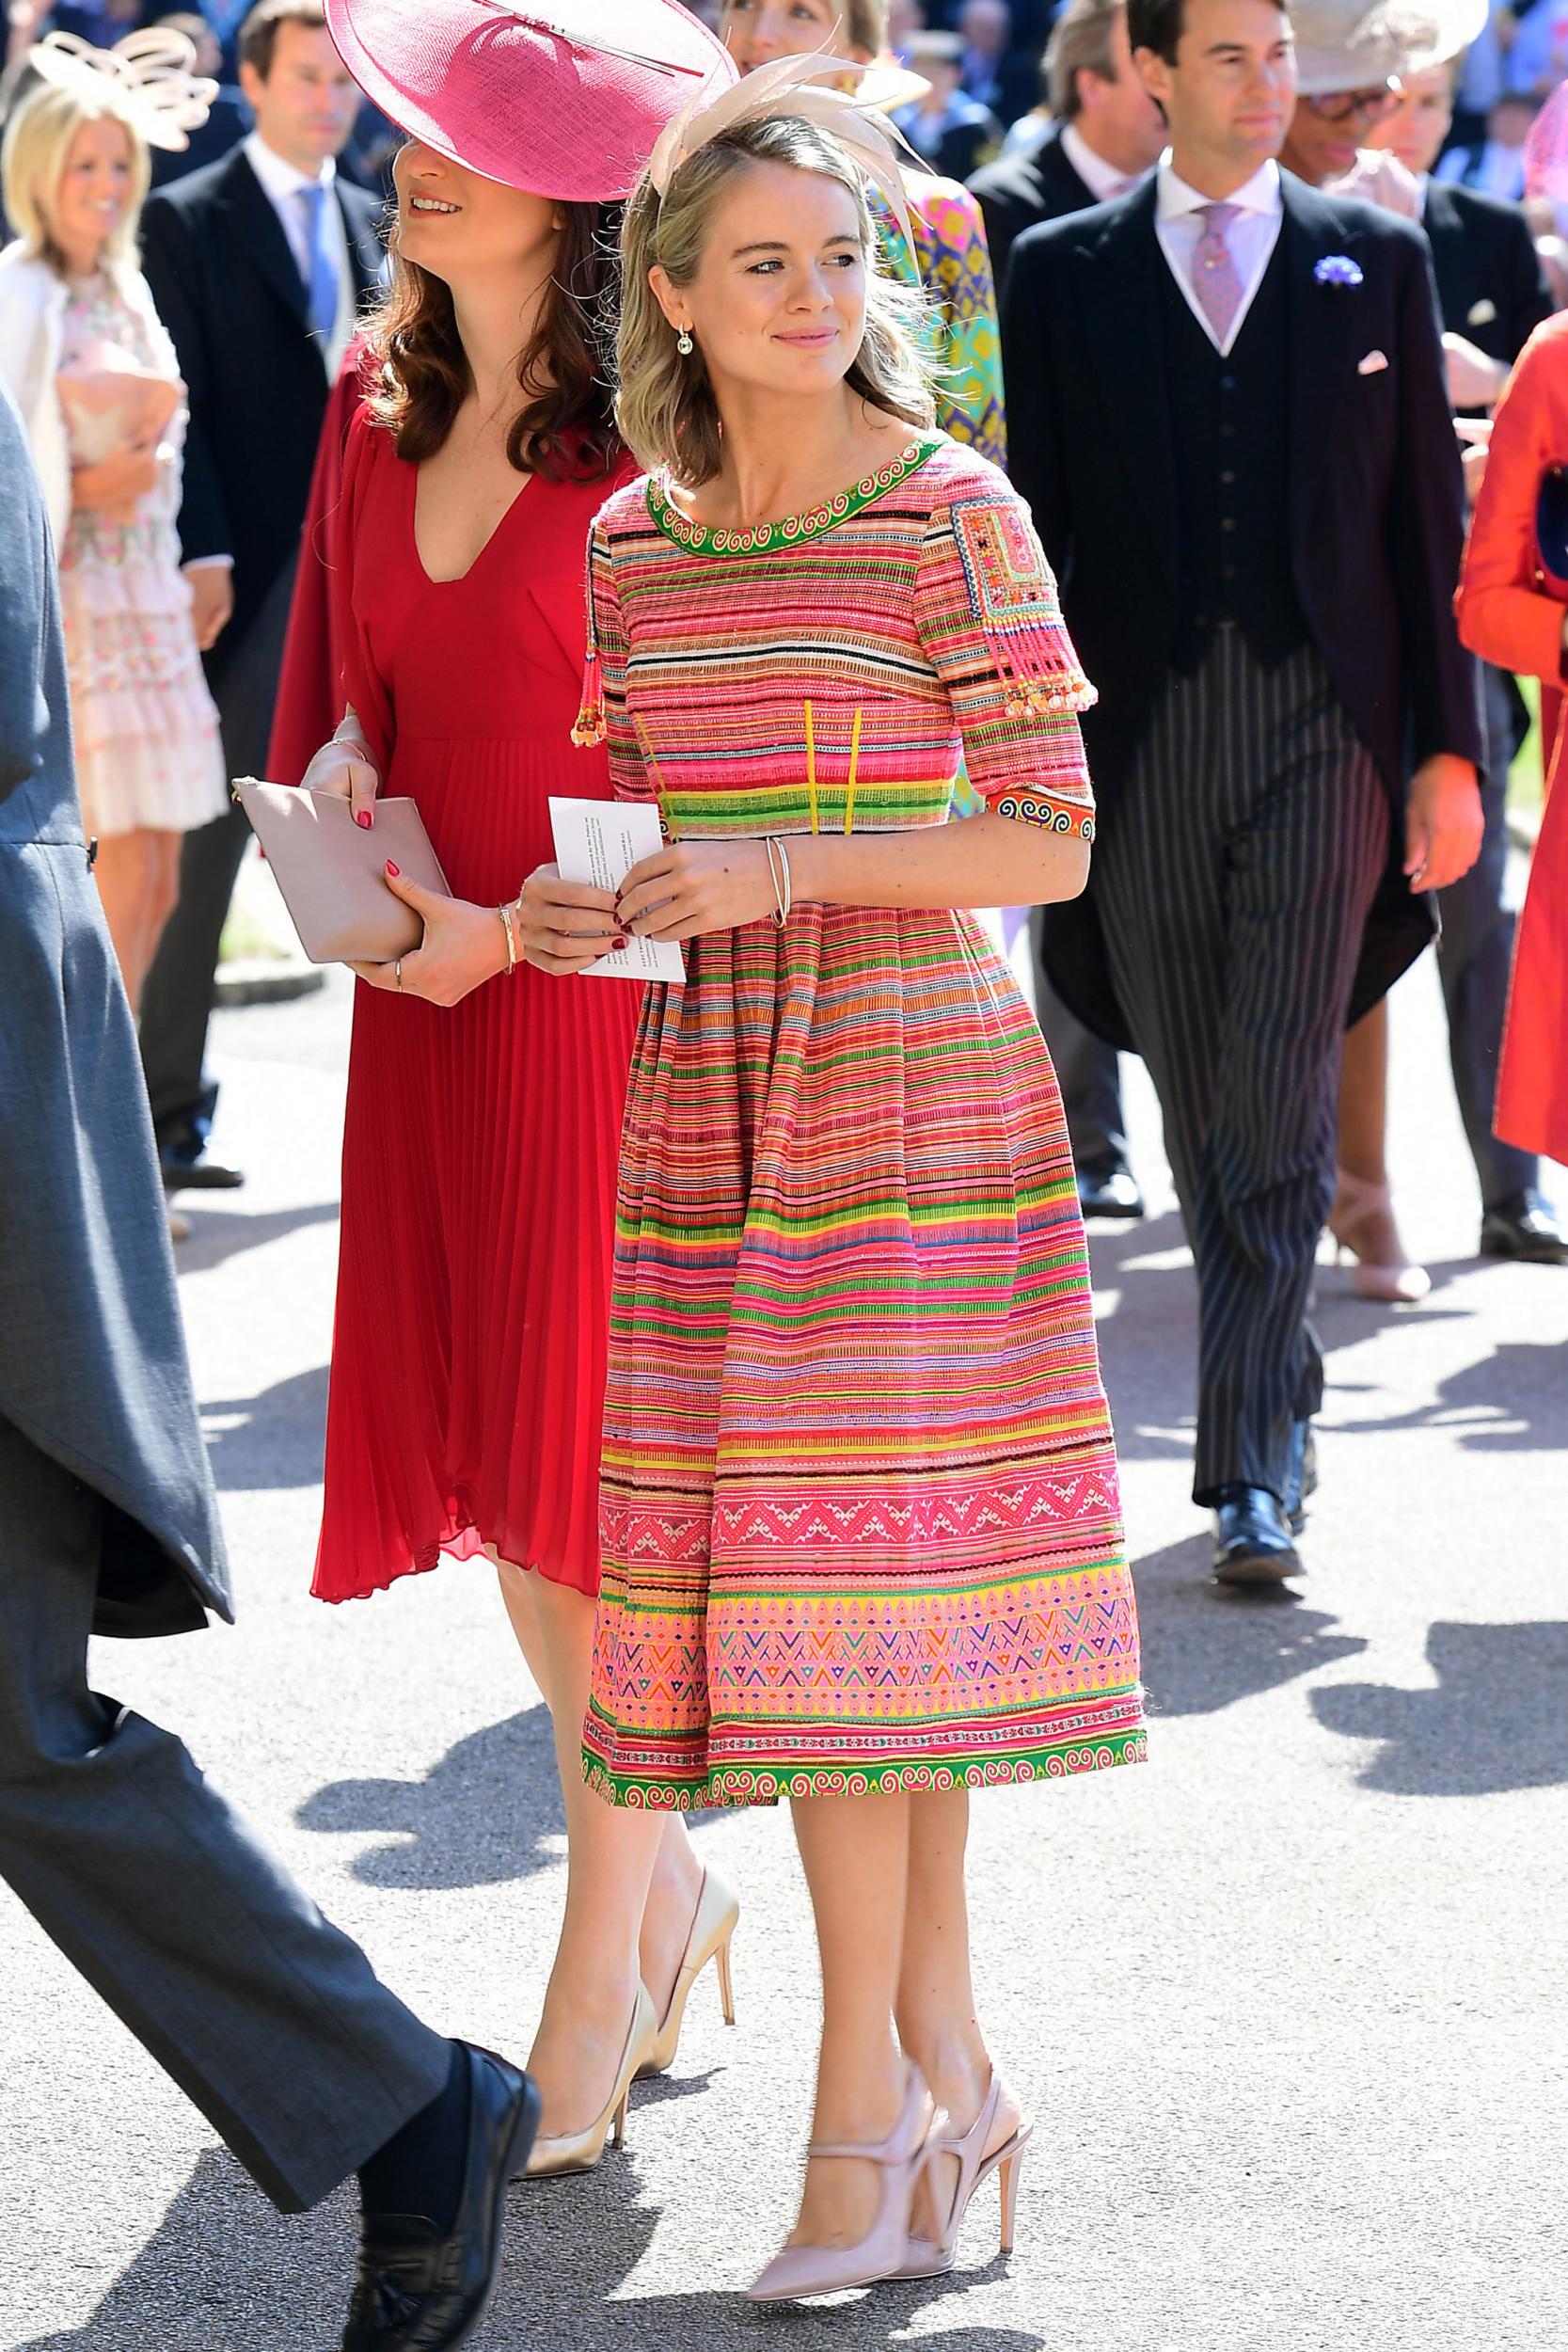 Cressida Bonas attends the royal wedding wearing a colourful ensemble by British designer Eponine.